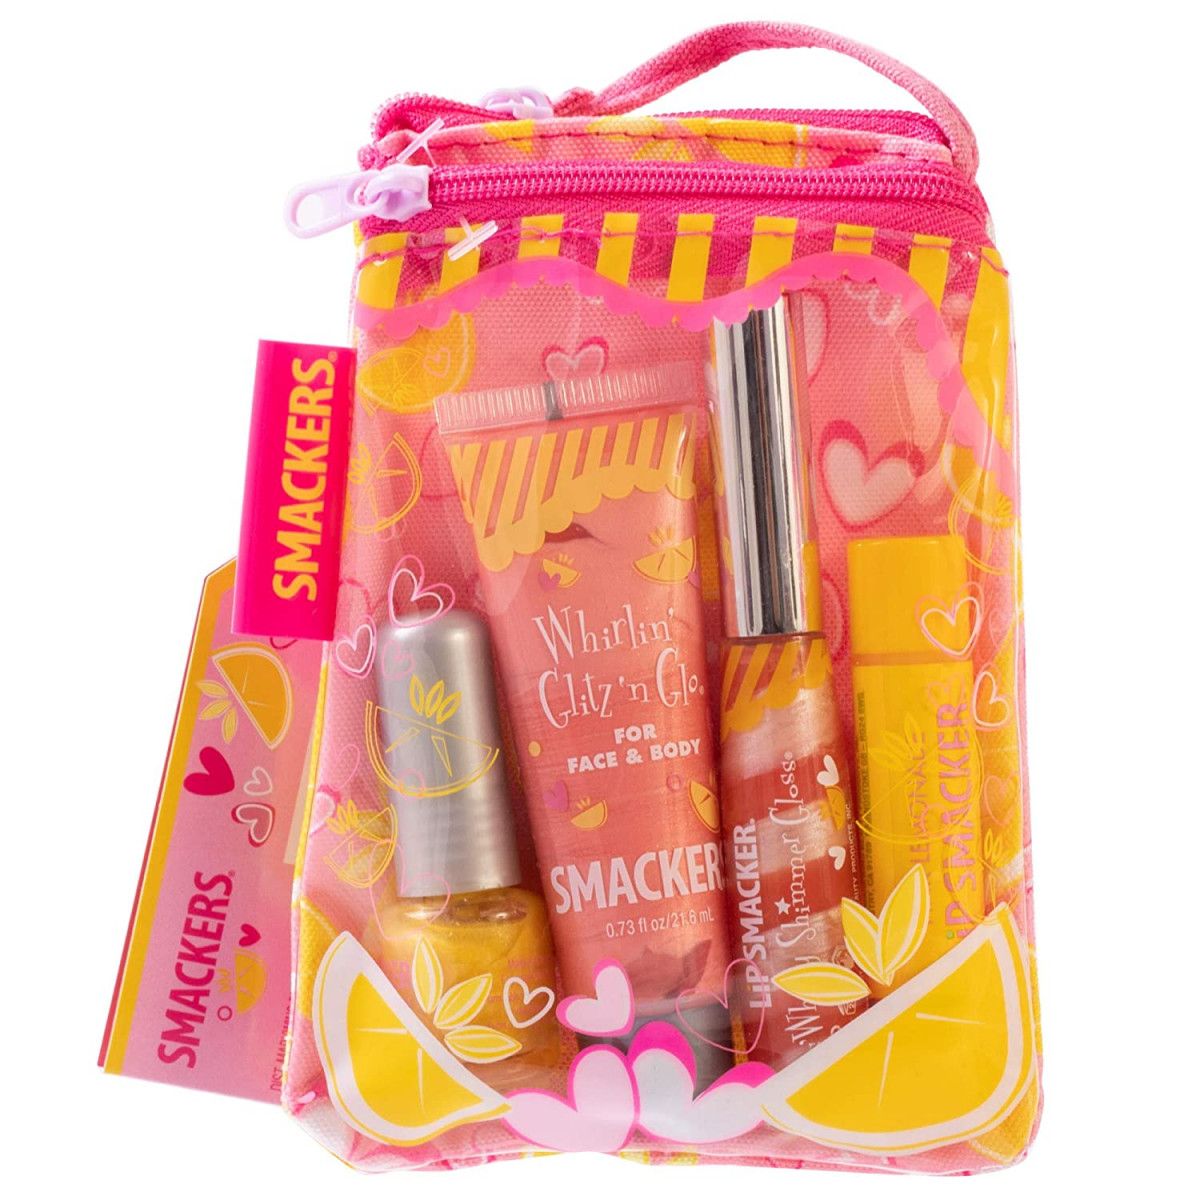 Alea's Deals Smackers Pink Lemonade Glam Bag Makeup Set  – 20% PRICE DROP+SUB/SAVE!  